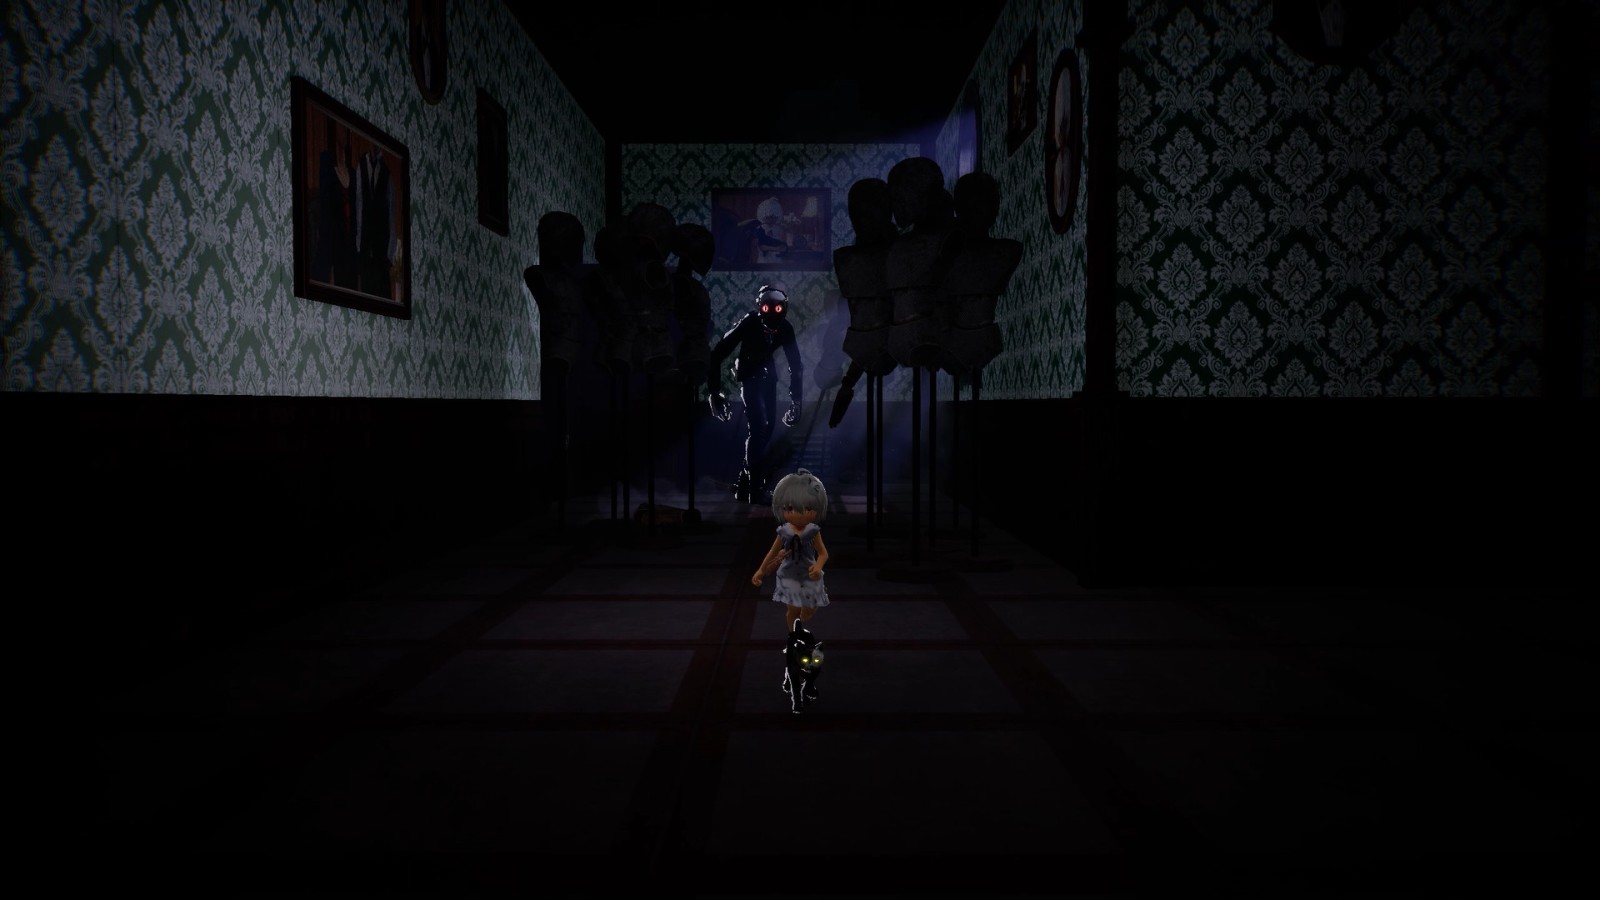 《LIGHT：Black Cat & Amnesia Girl》现已登陆Steam抢先体验